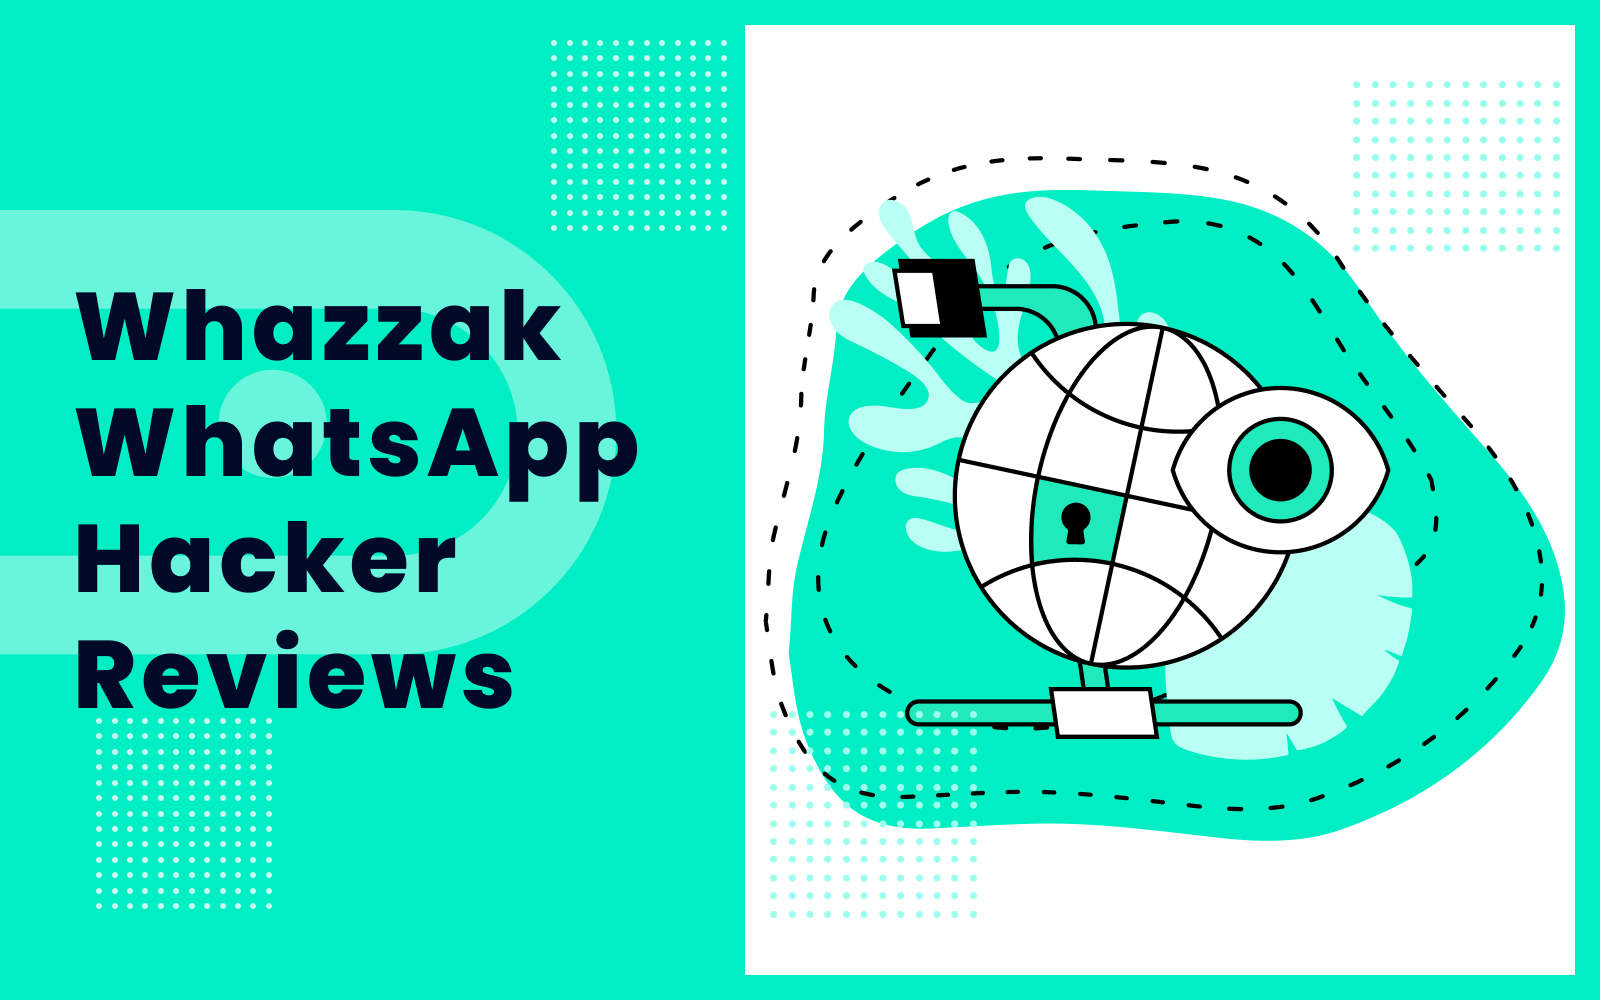 Whazzak WhatsApp Hacker Reviews 2022: Scam or Authentic?